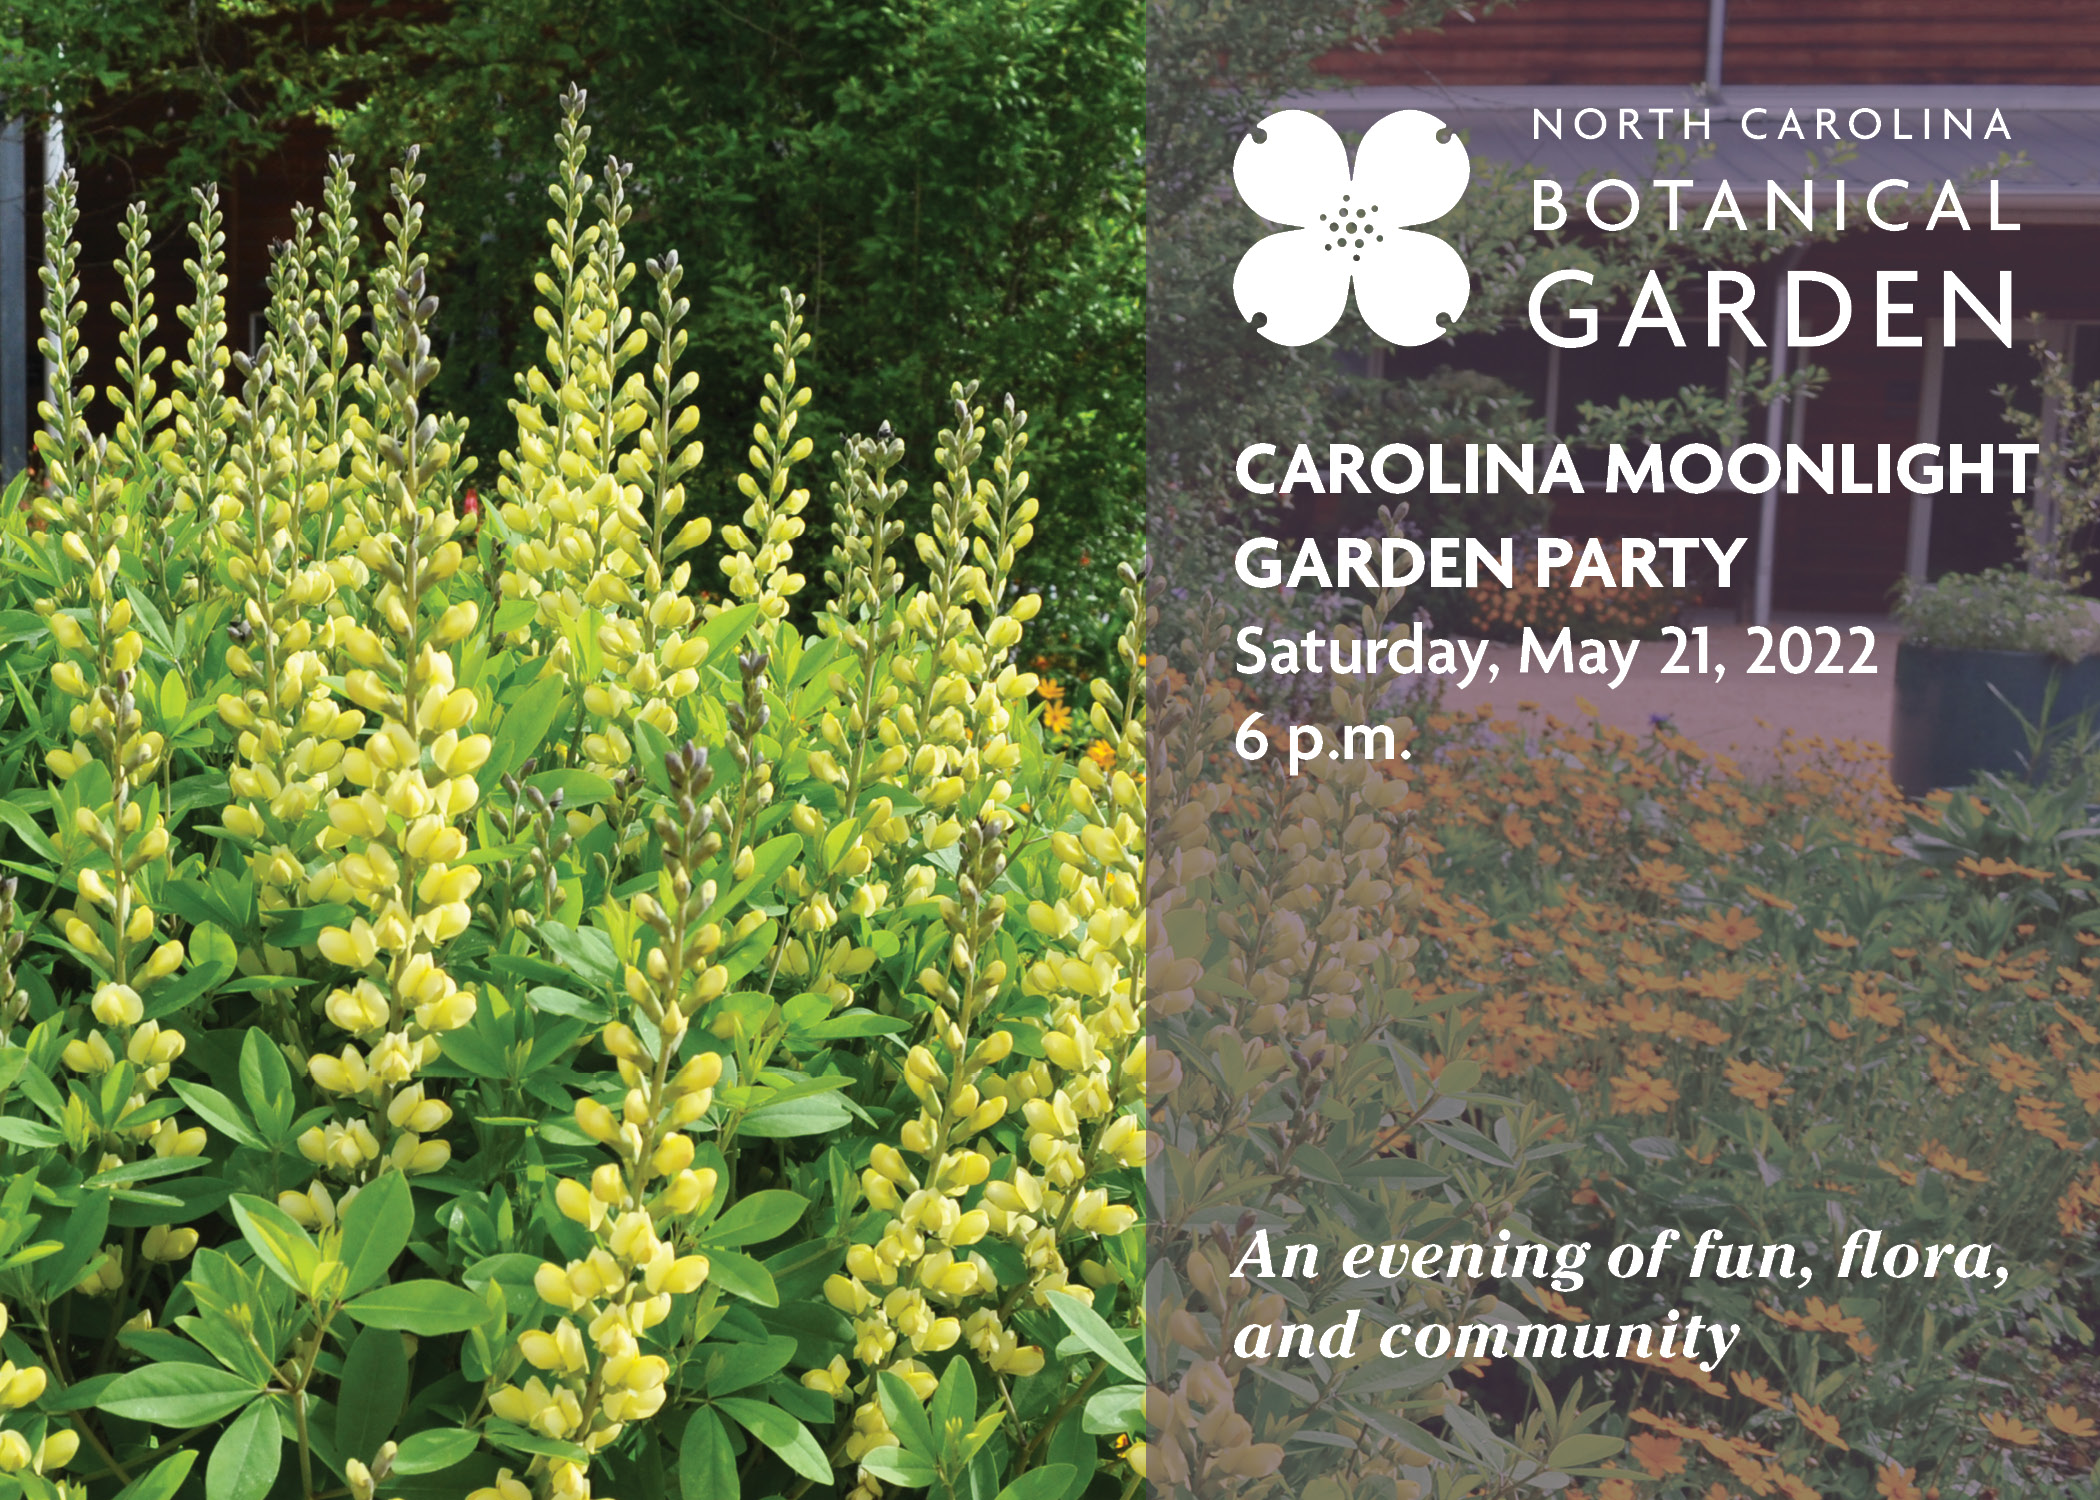 Carolina Moonlight baptisia, NCBG logo, Carolina Moonlight Garden Party, Saturday, May 21, 2022, 6 p.m., An evening of fun, flora, and community